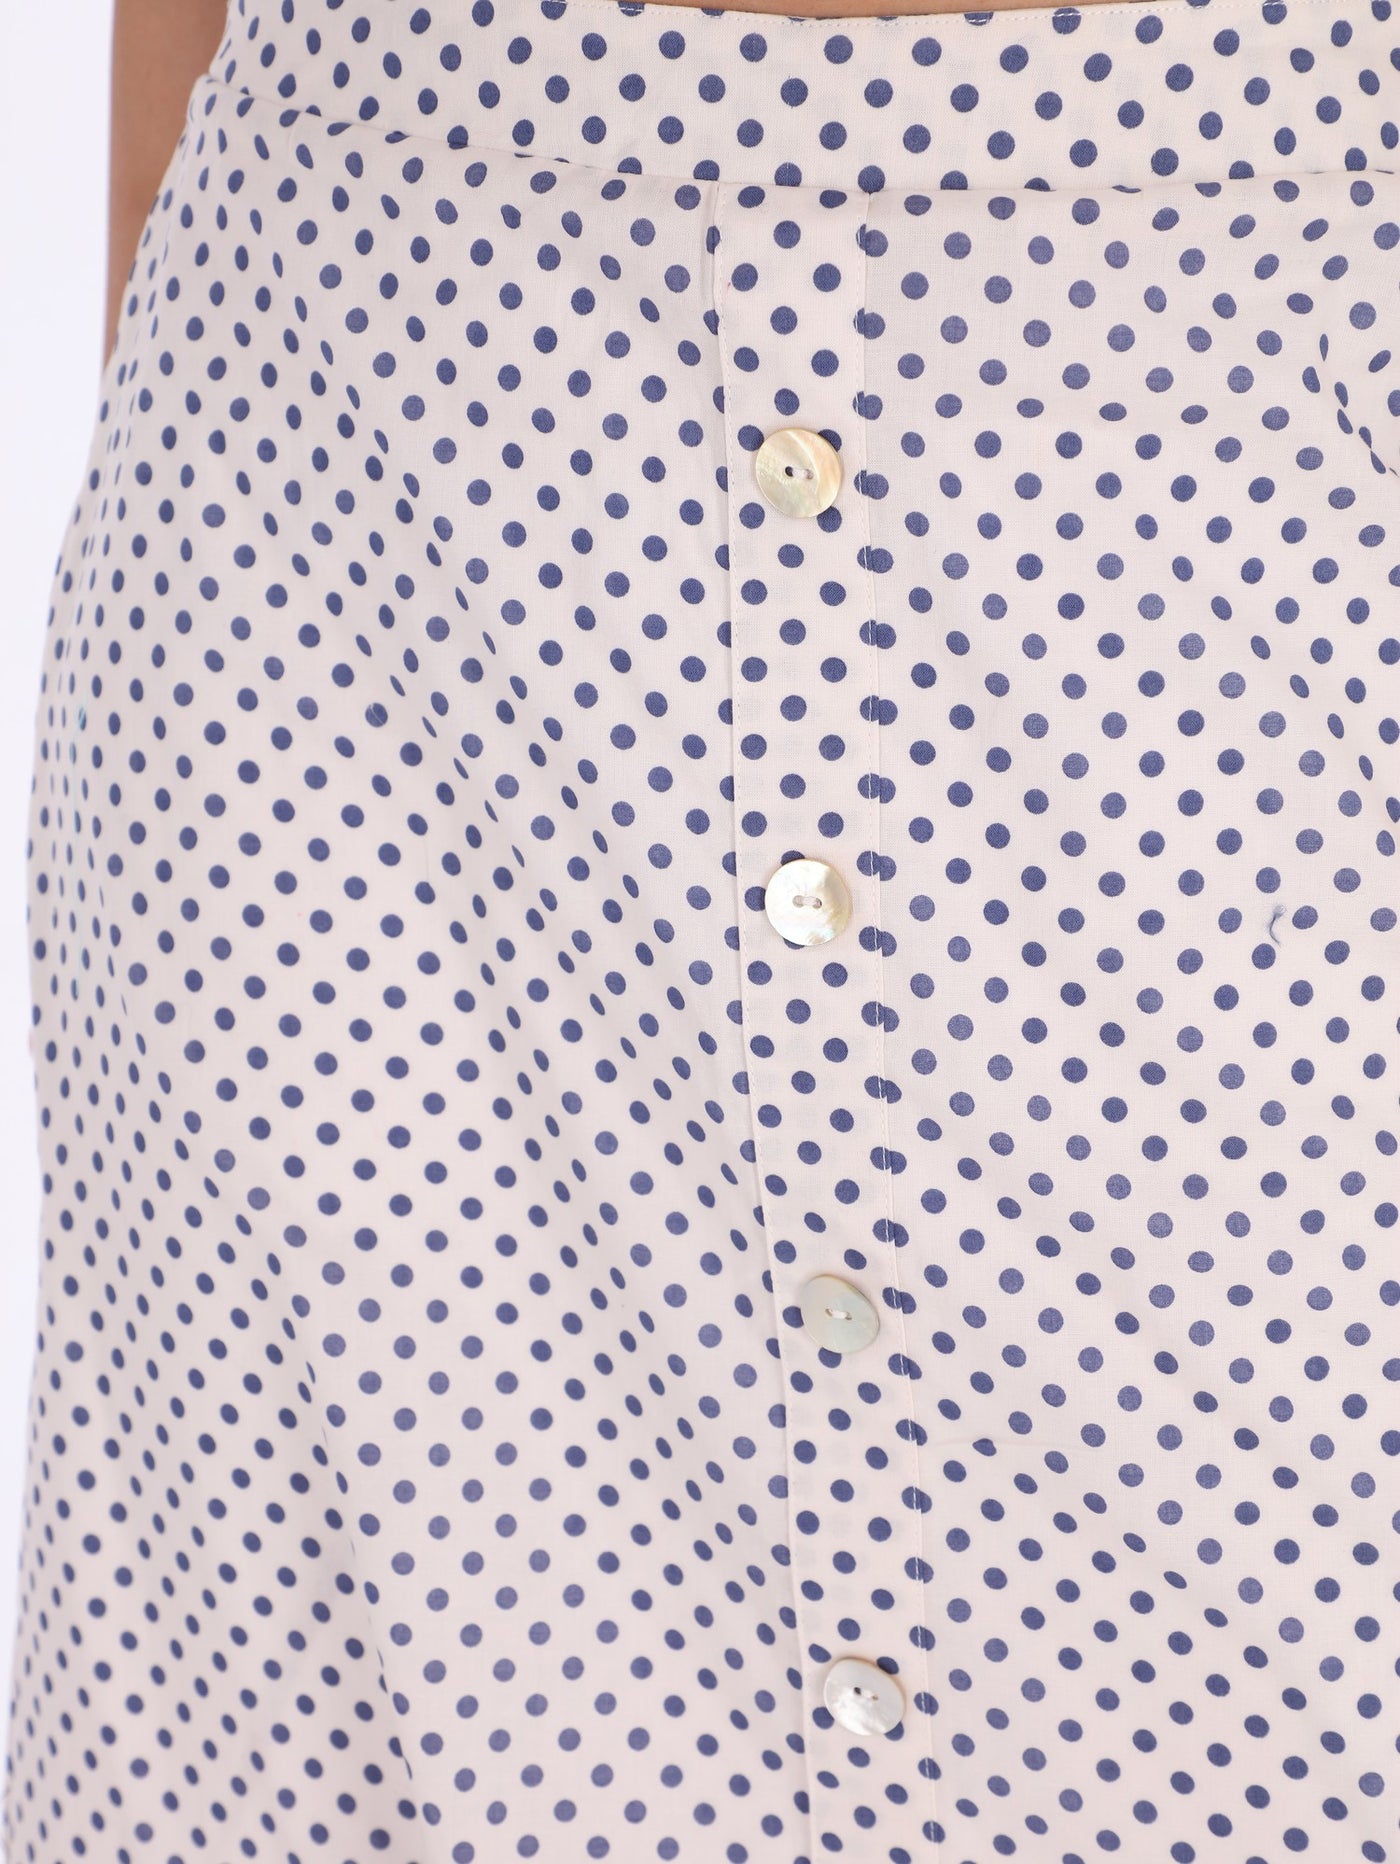 O'Zone Women's Ruffle Hem Polka Dot Skirt